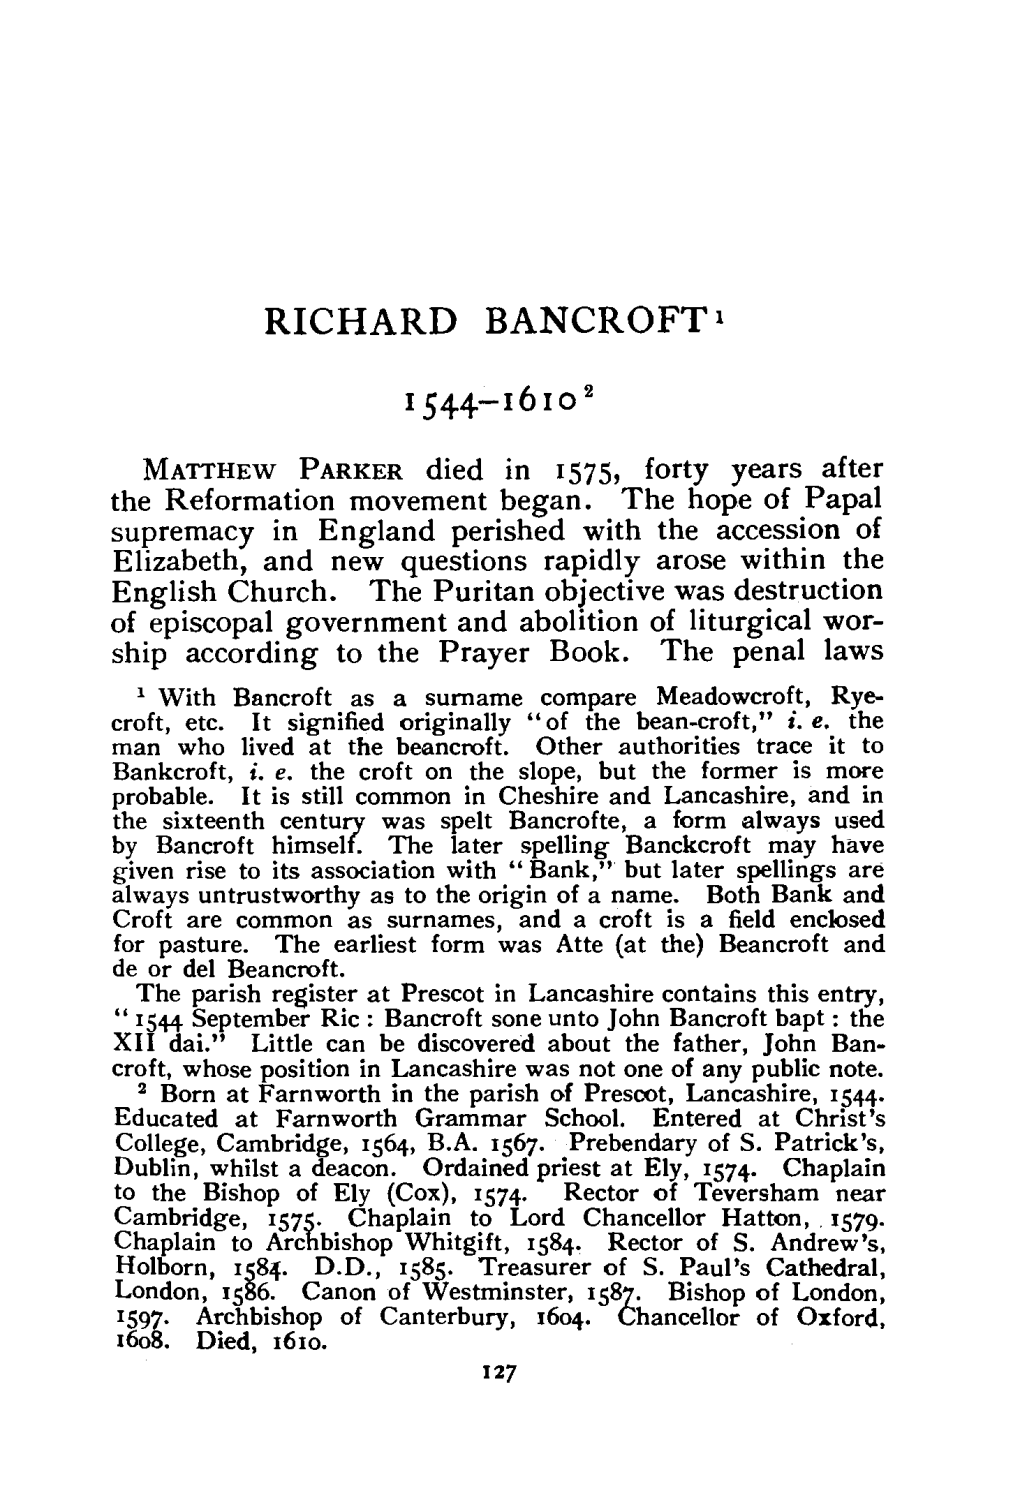 Richard Bancroft 1